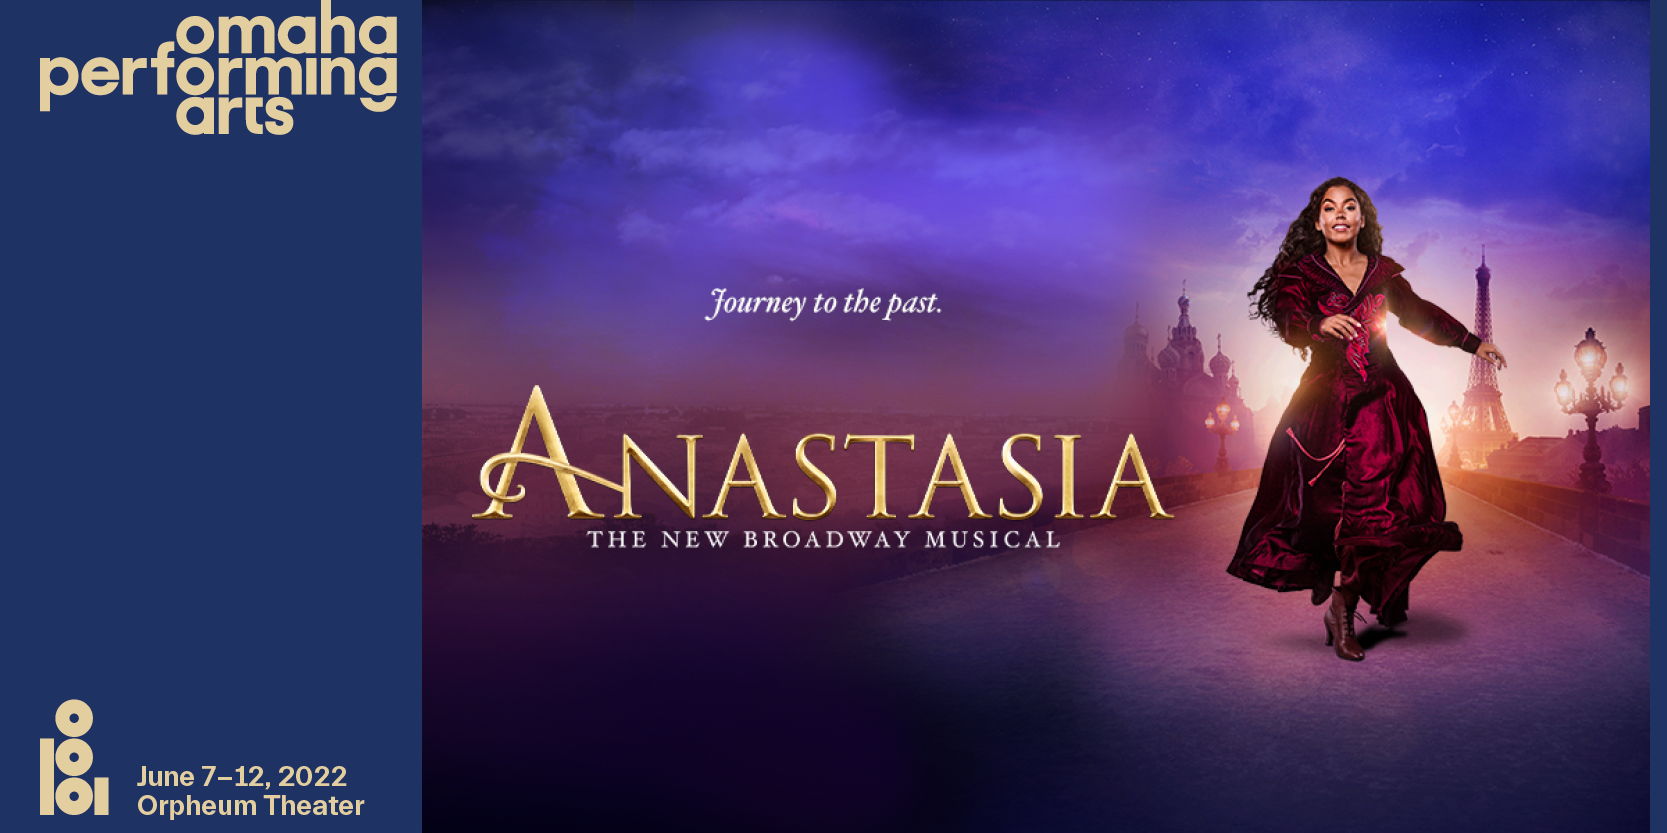 ANASTASIA promotional image